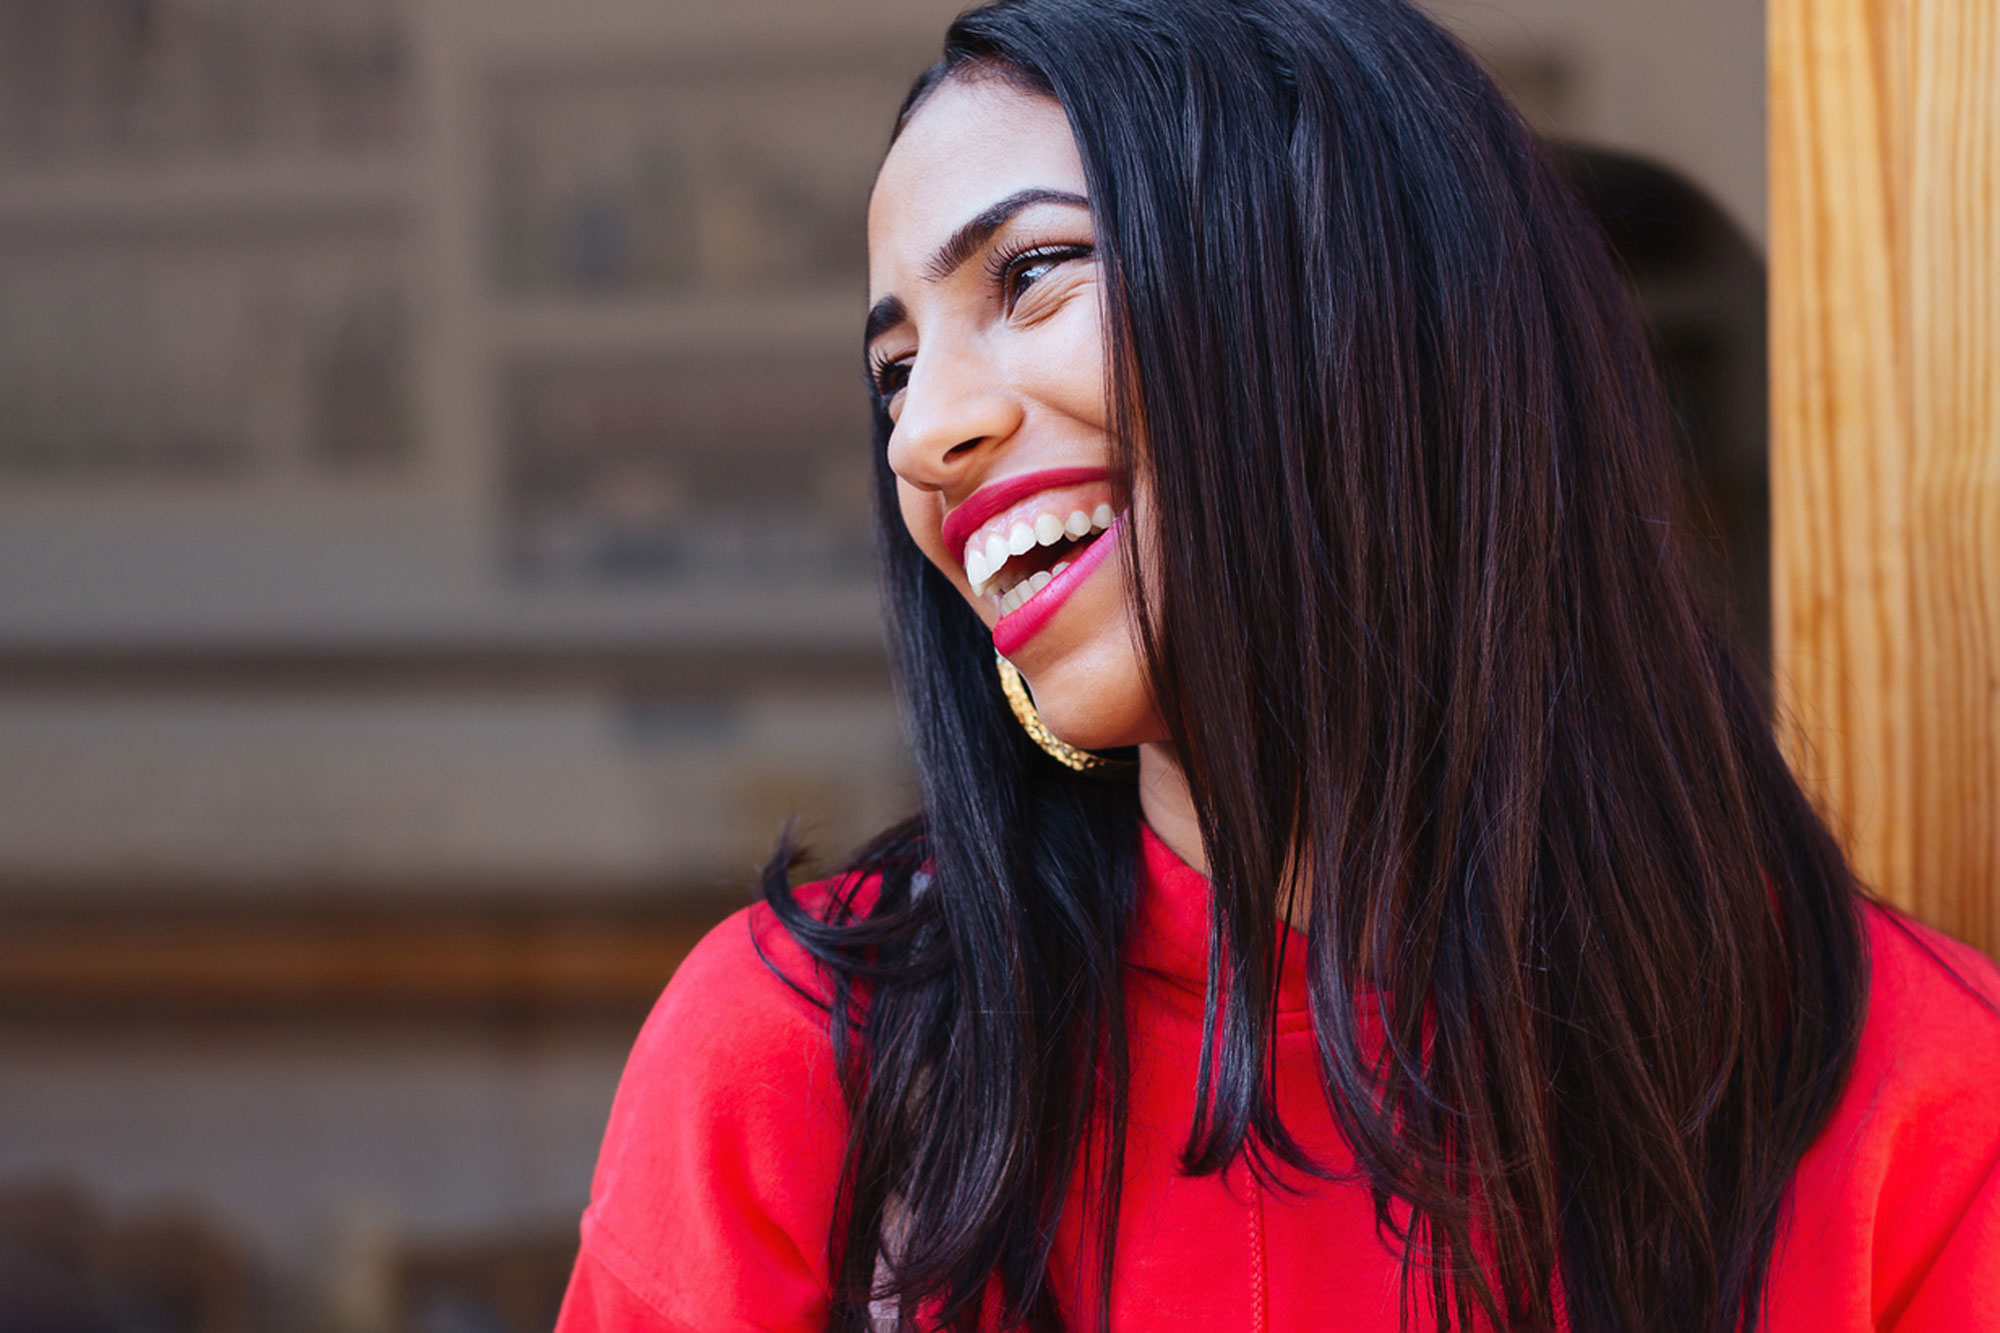 woman wearing red lipstick smiling